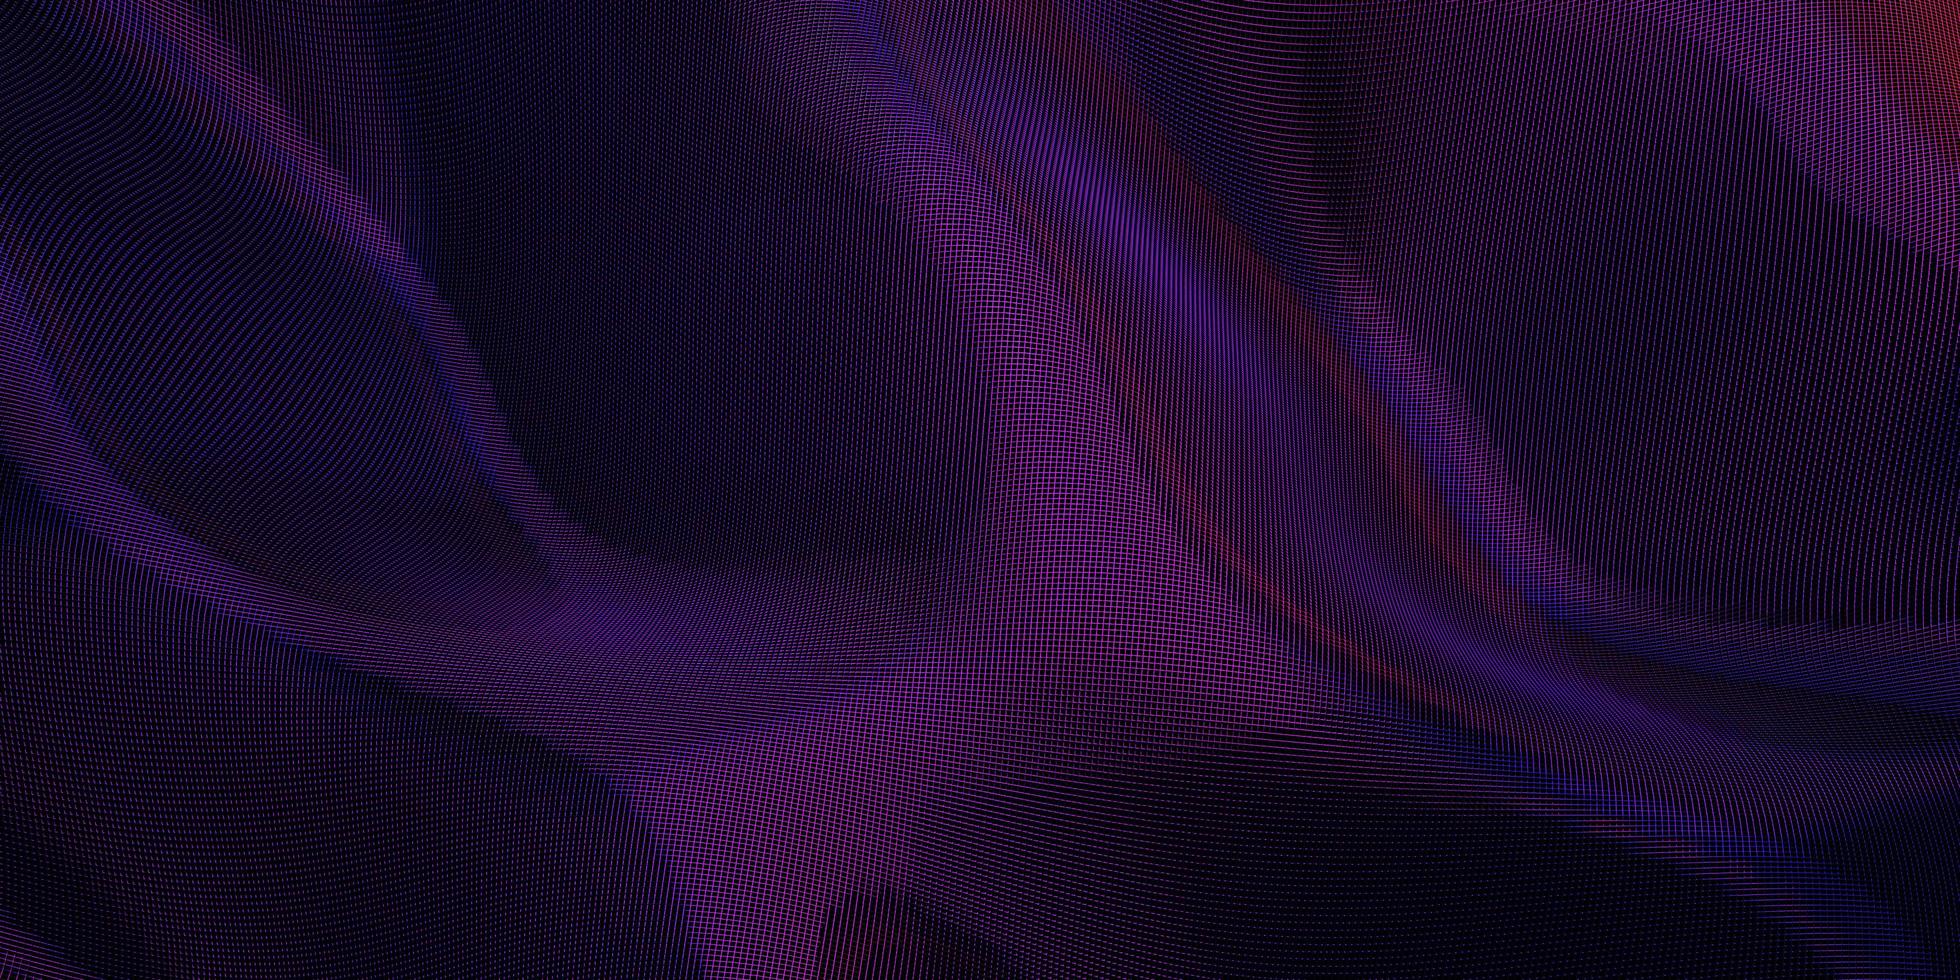 mesh digital wave technology background Shiny reflective surface photo